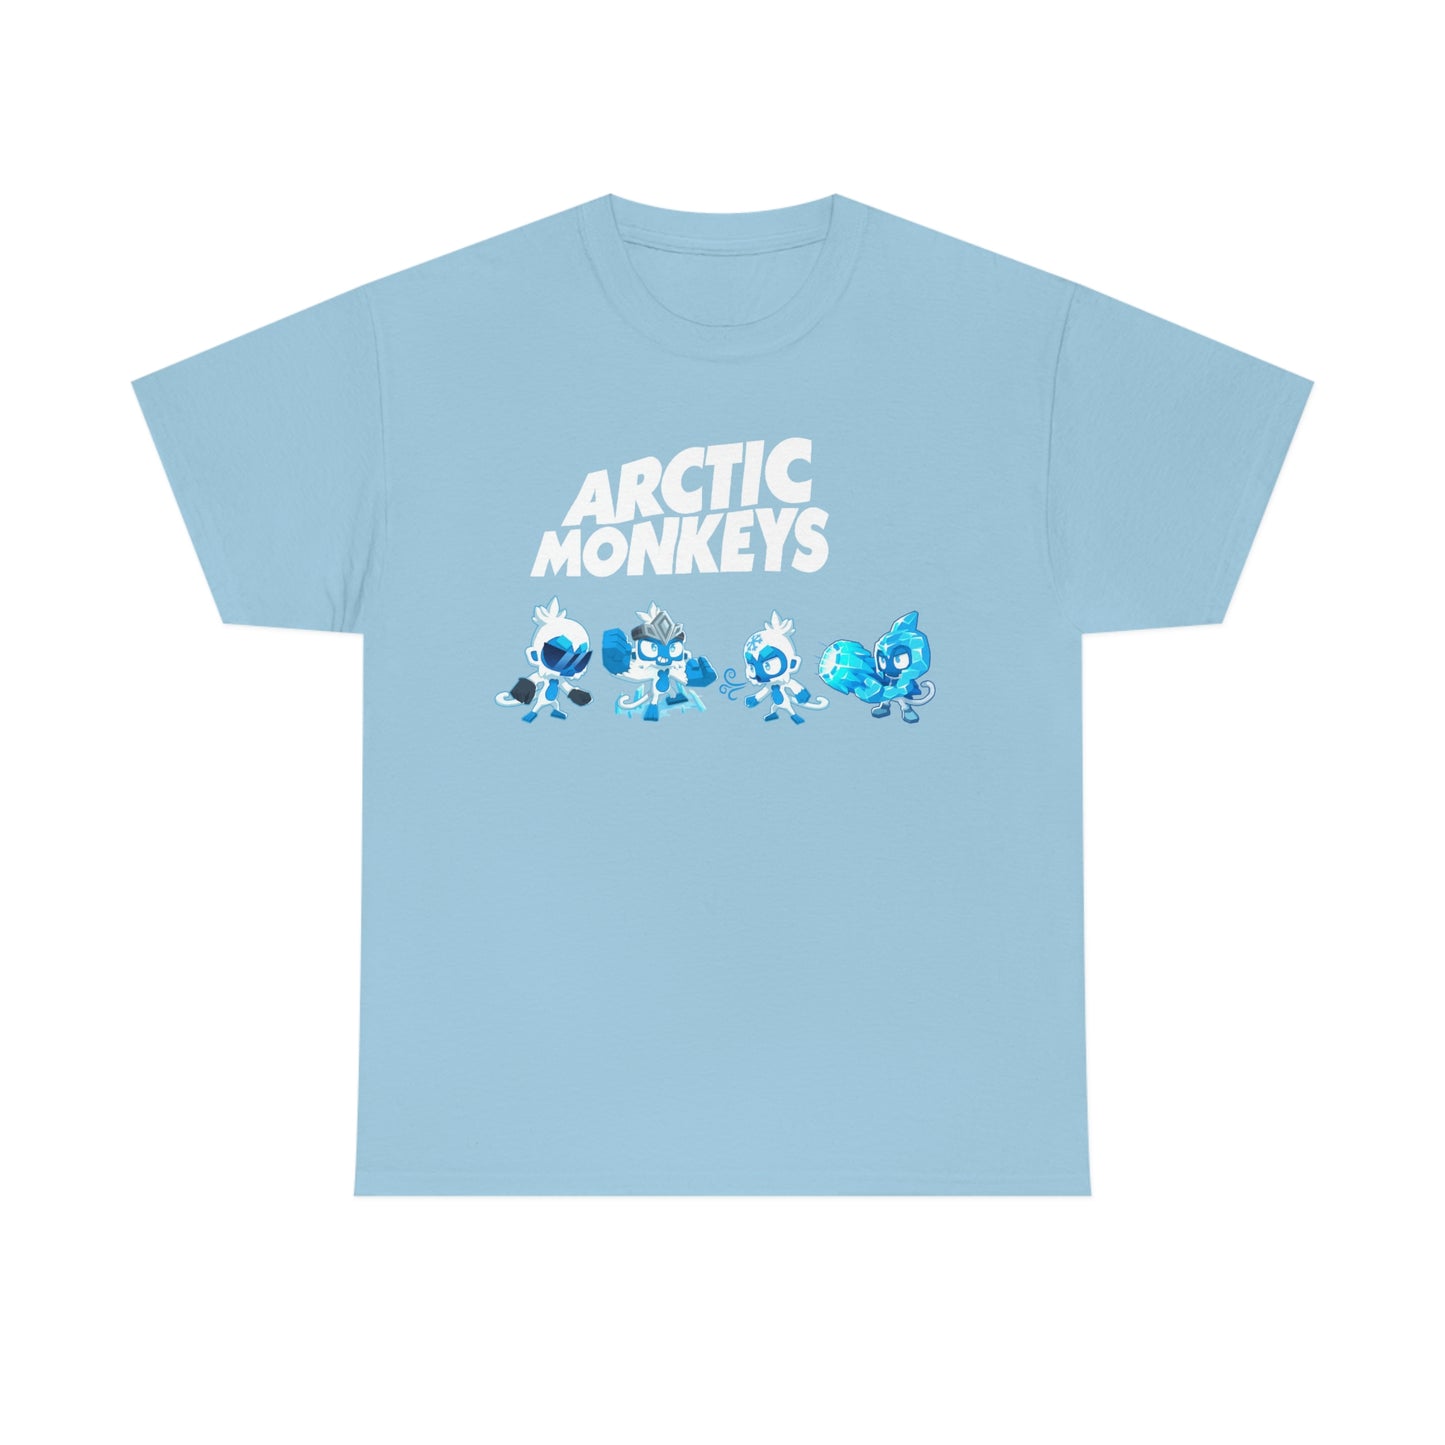 Arctic Monkee (No text) Tee